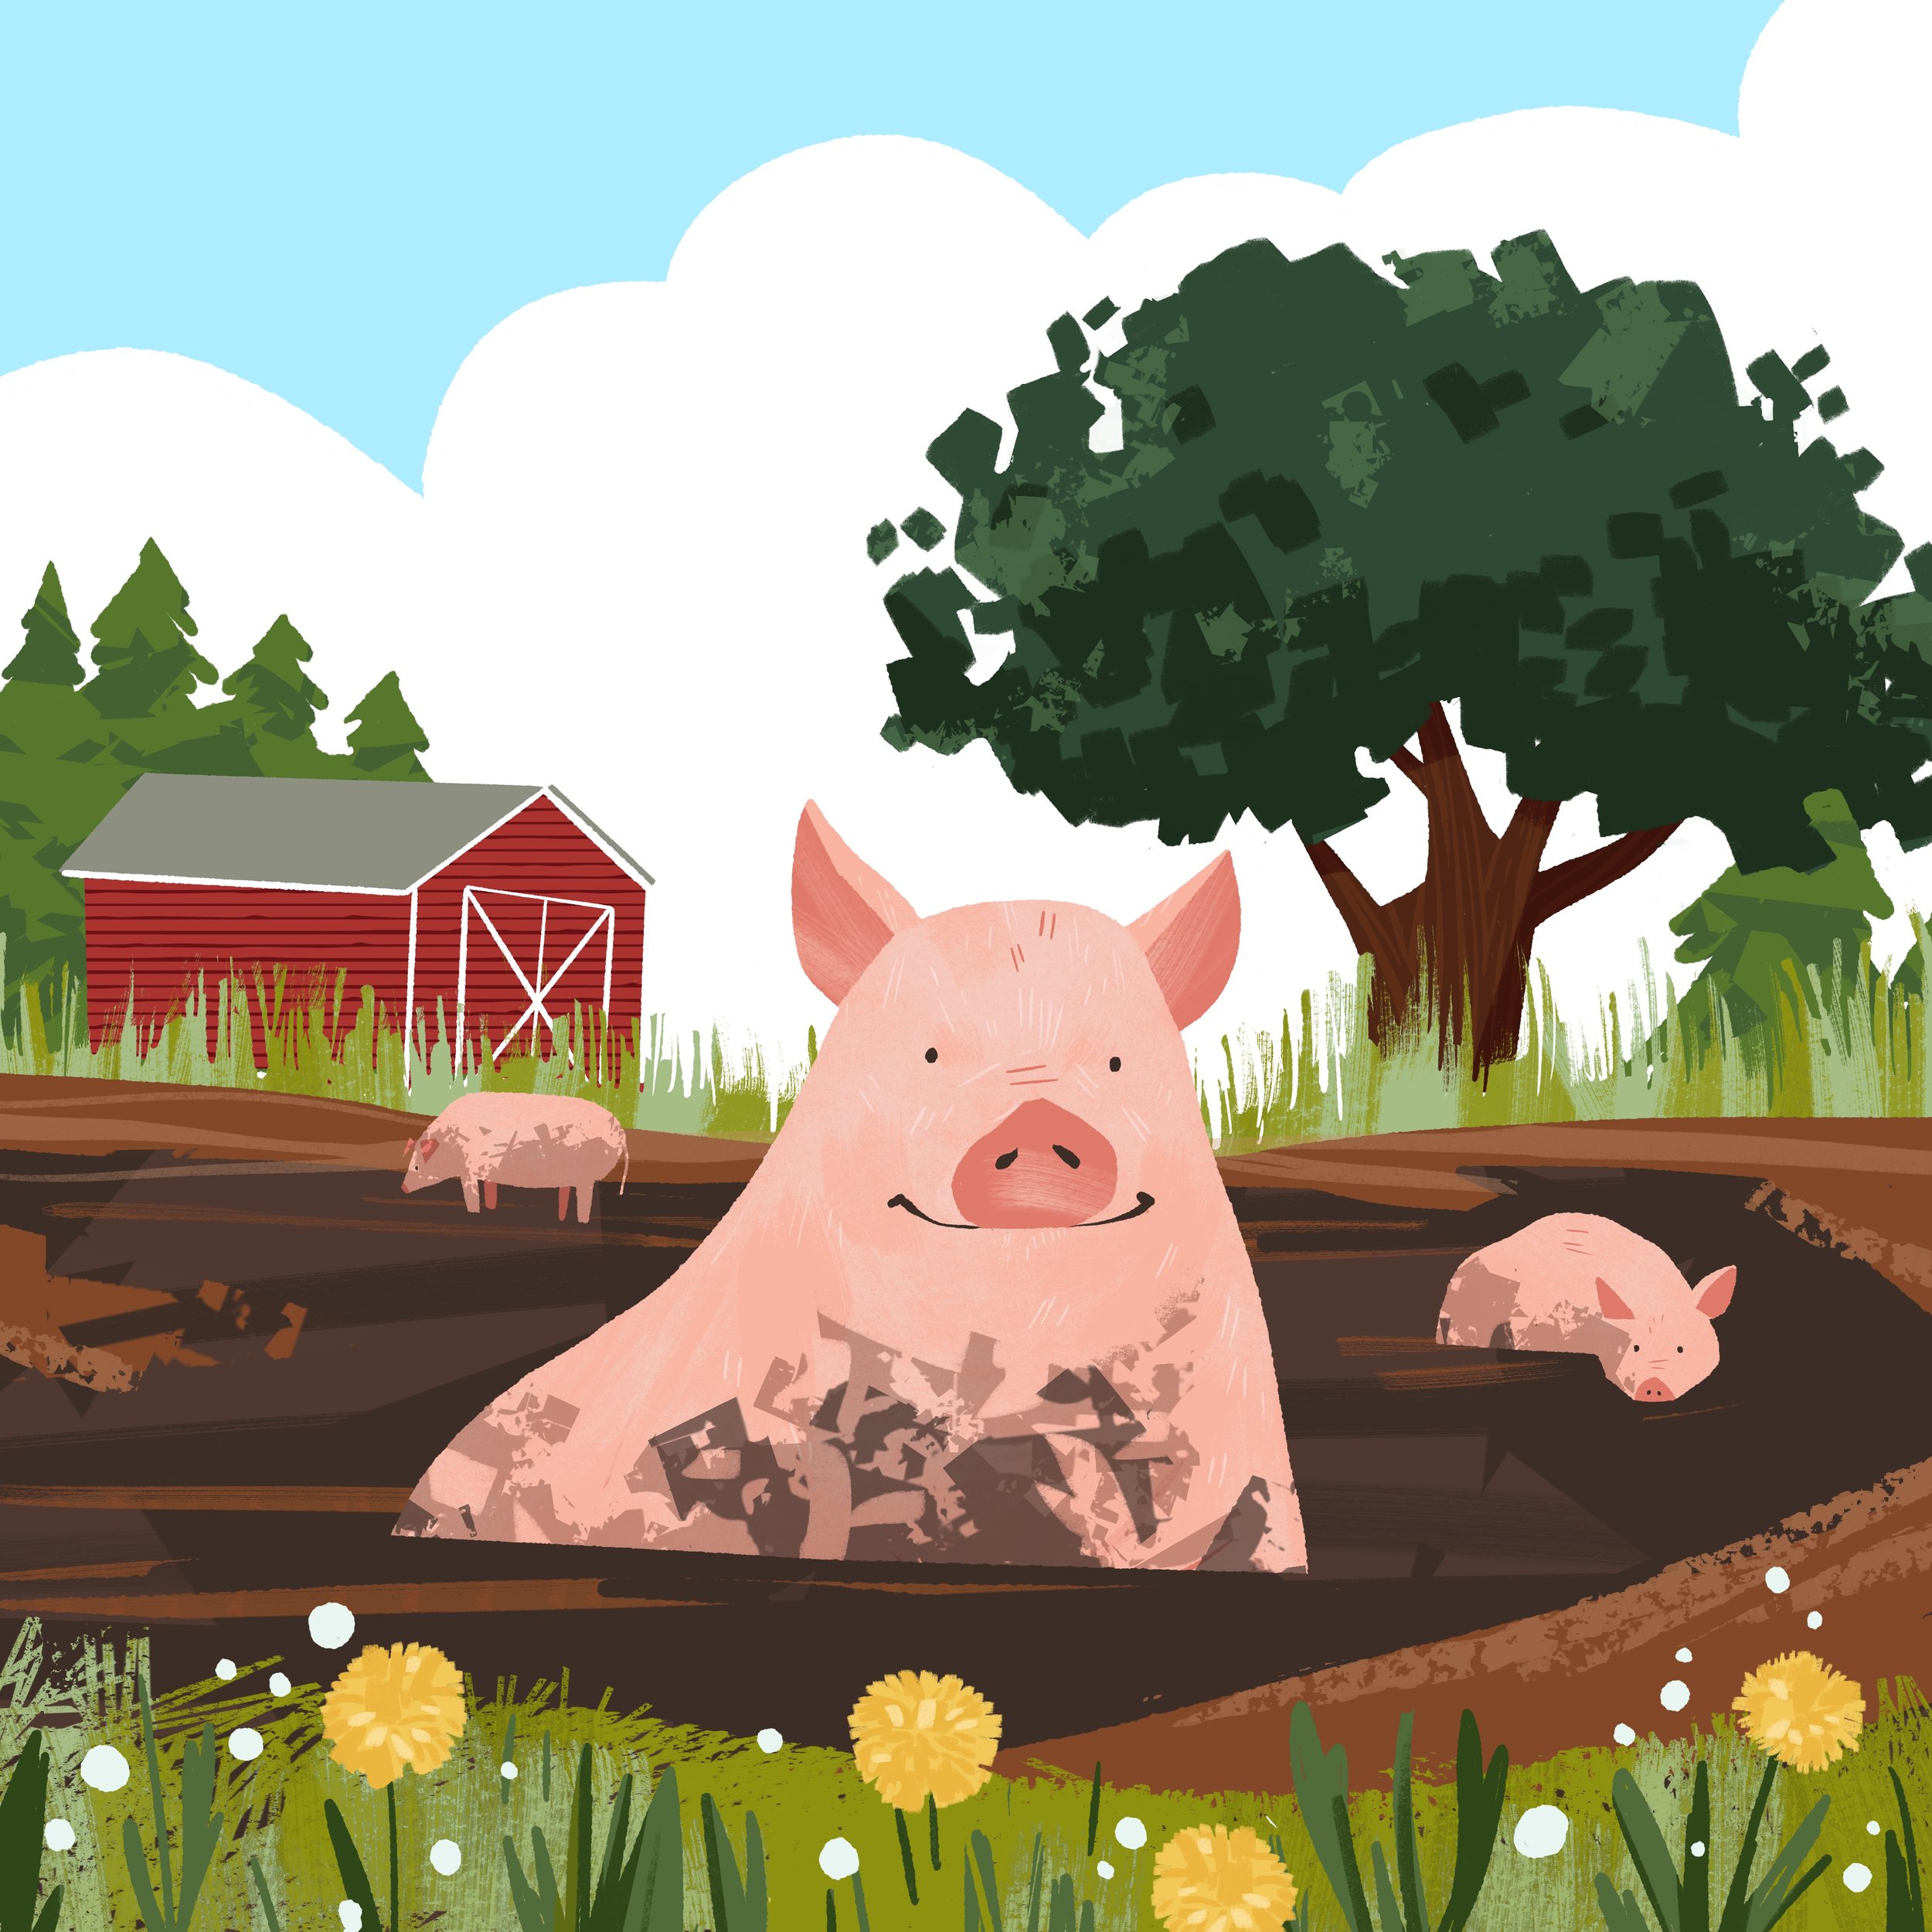 Drew Bardana Illustration - Pigs in the Mud on a Farm